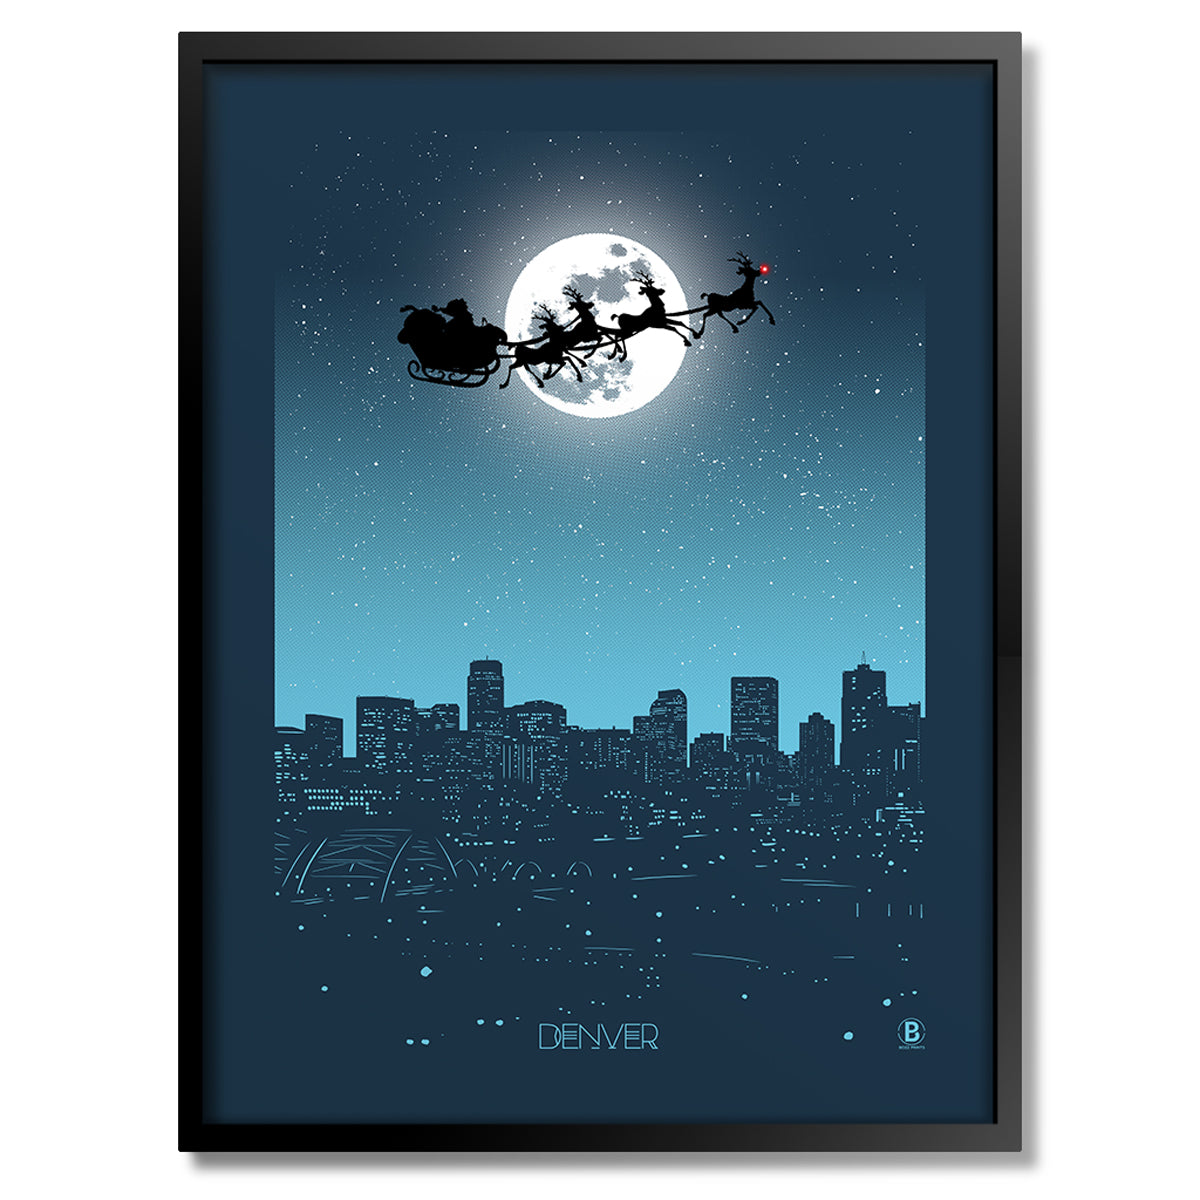 Denver Holiday Moon Print - Bozz Prints